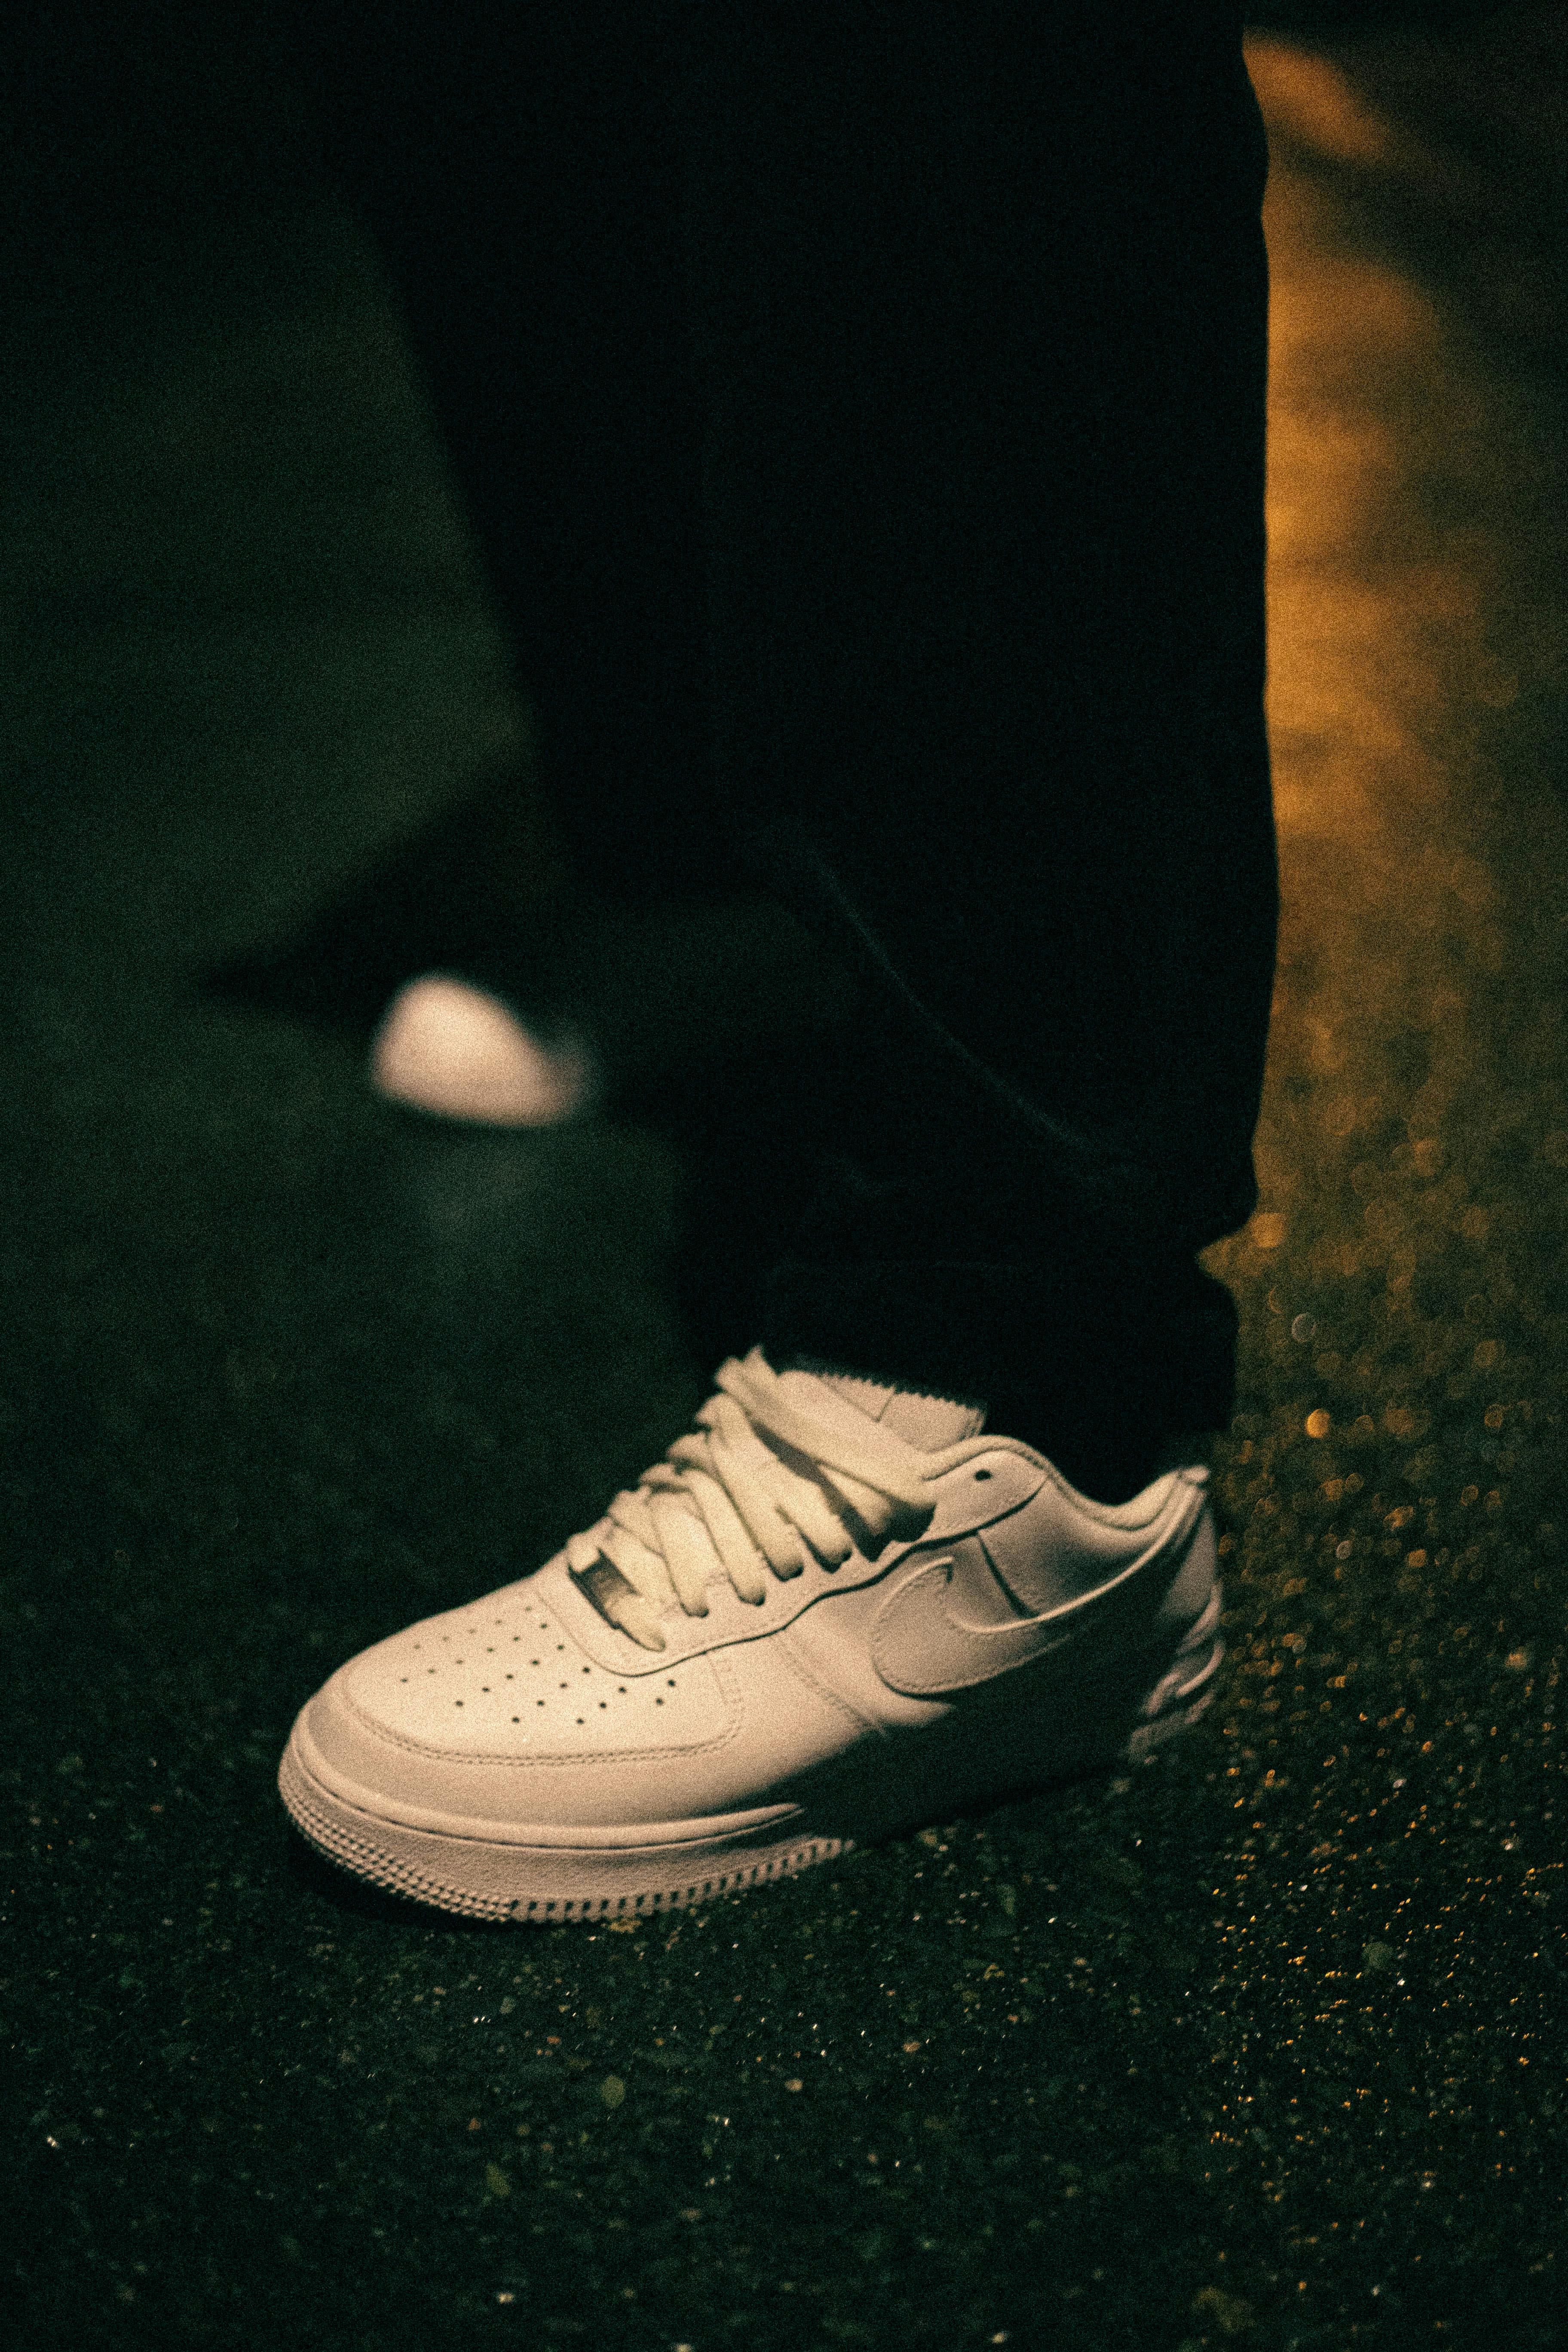 A White Nike Shoe · Free Stock Photo